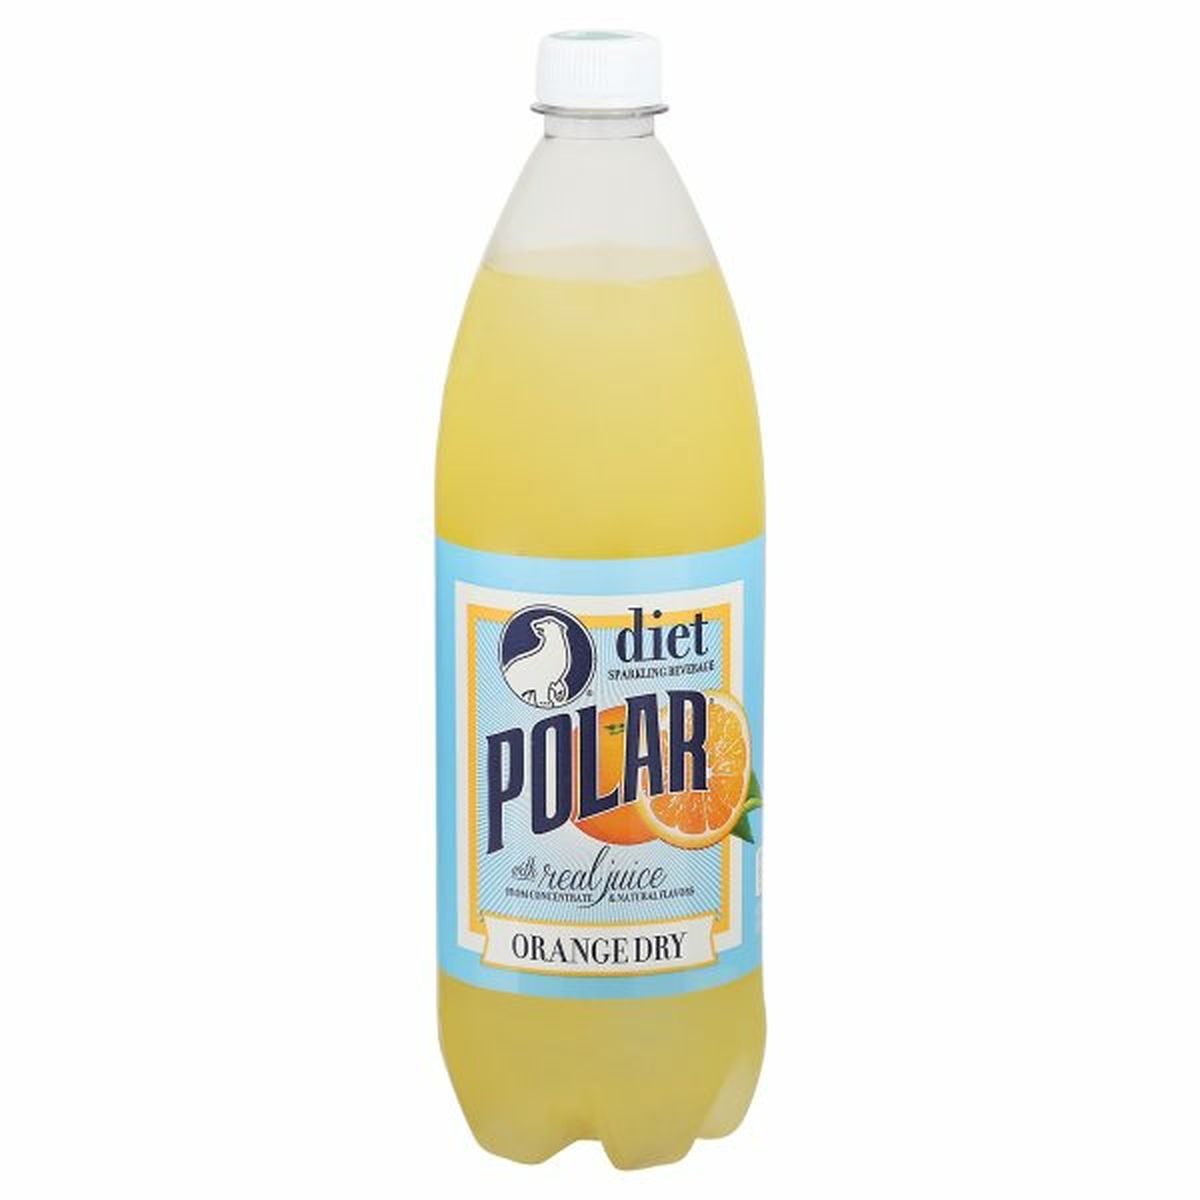 Calories in Polar Sparkling Beverage, Diet, Orange Dry